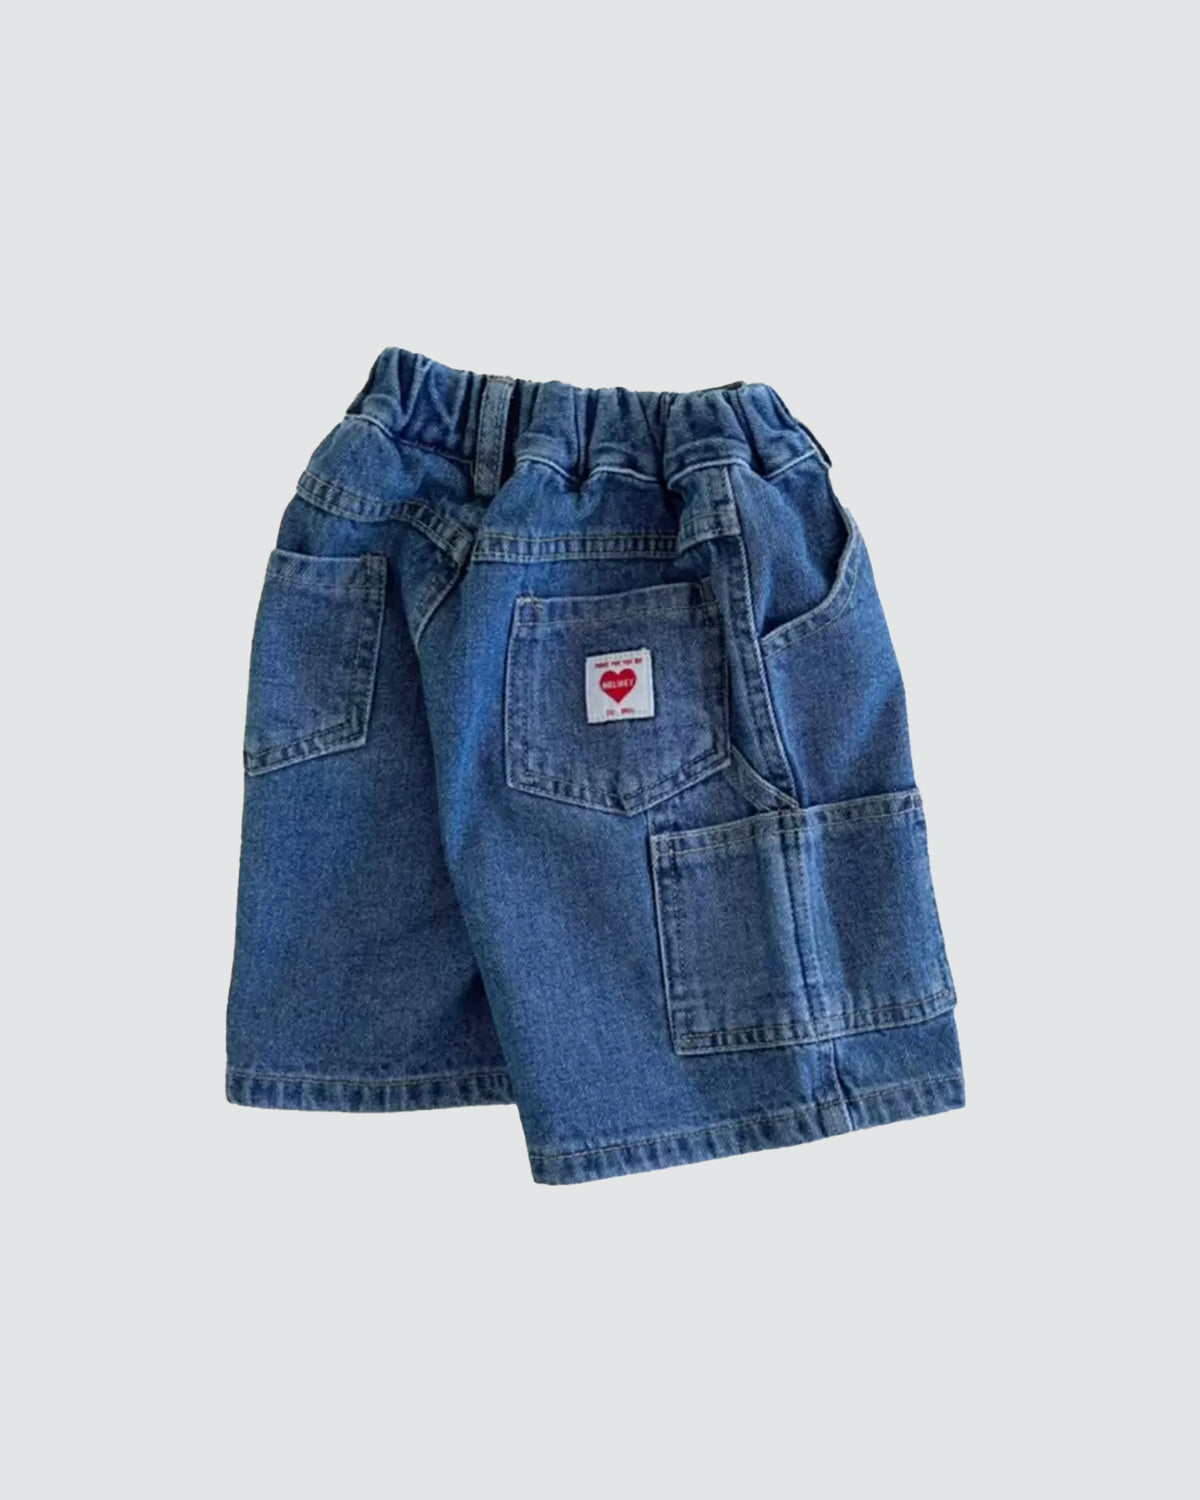 Pocket Denim Shorts